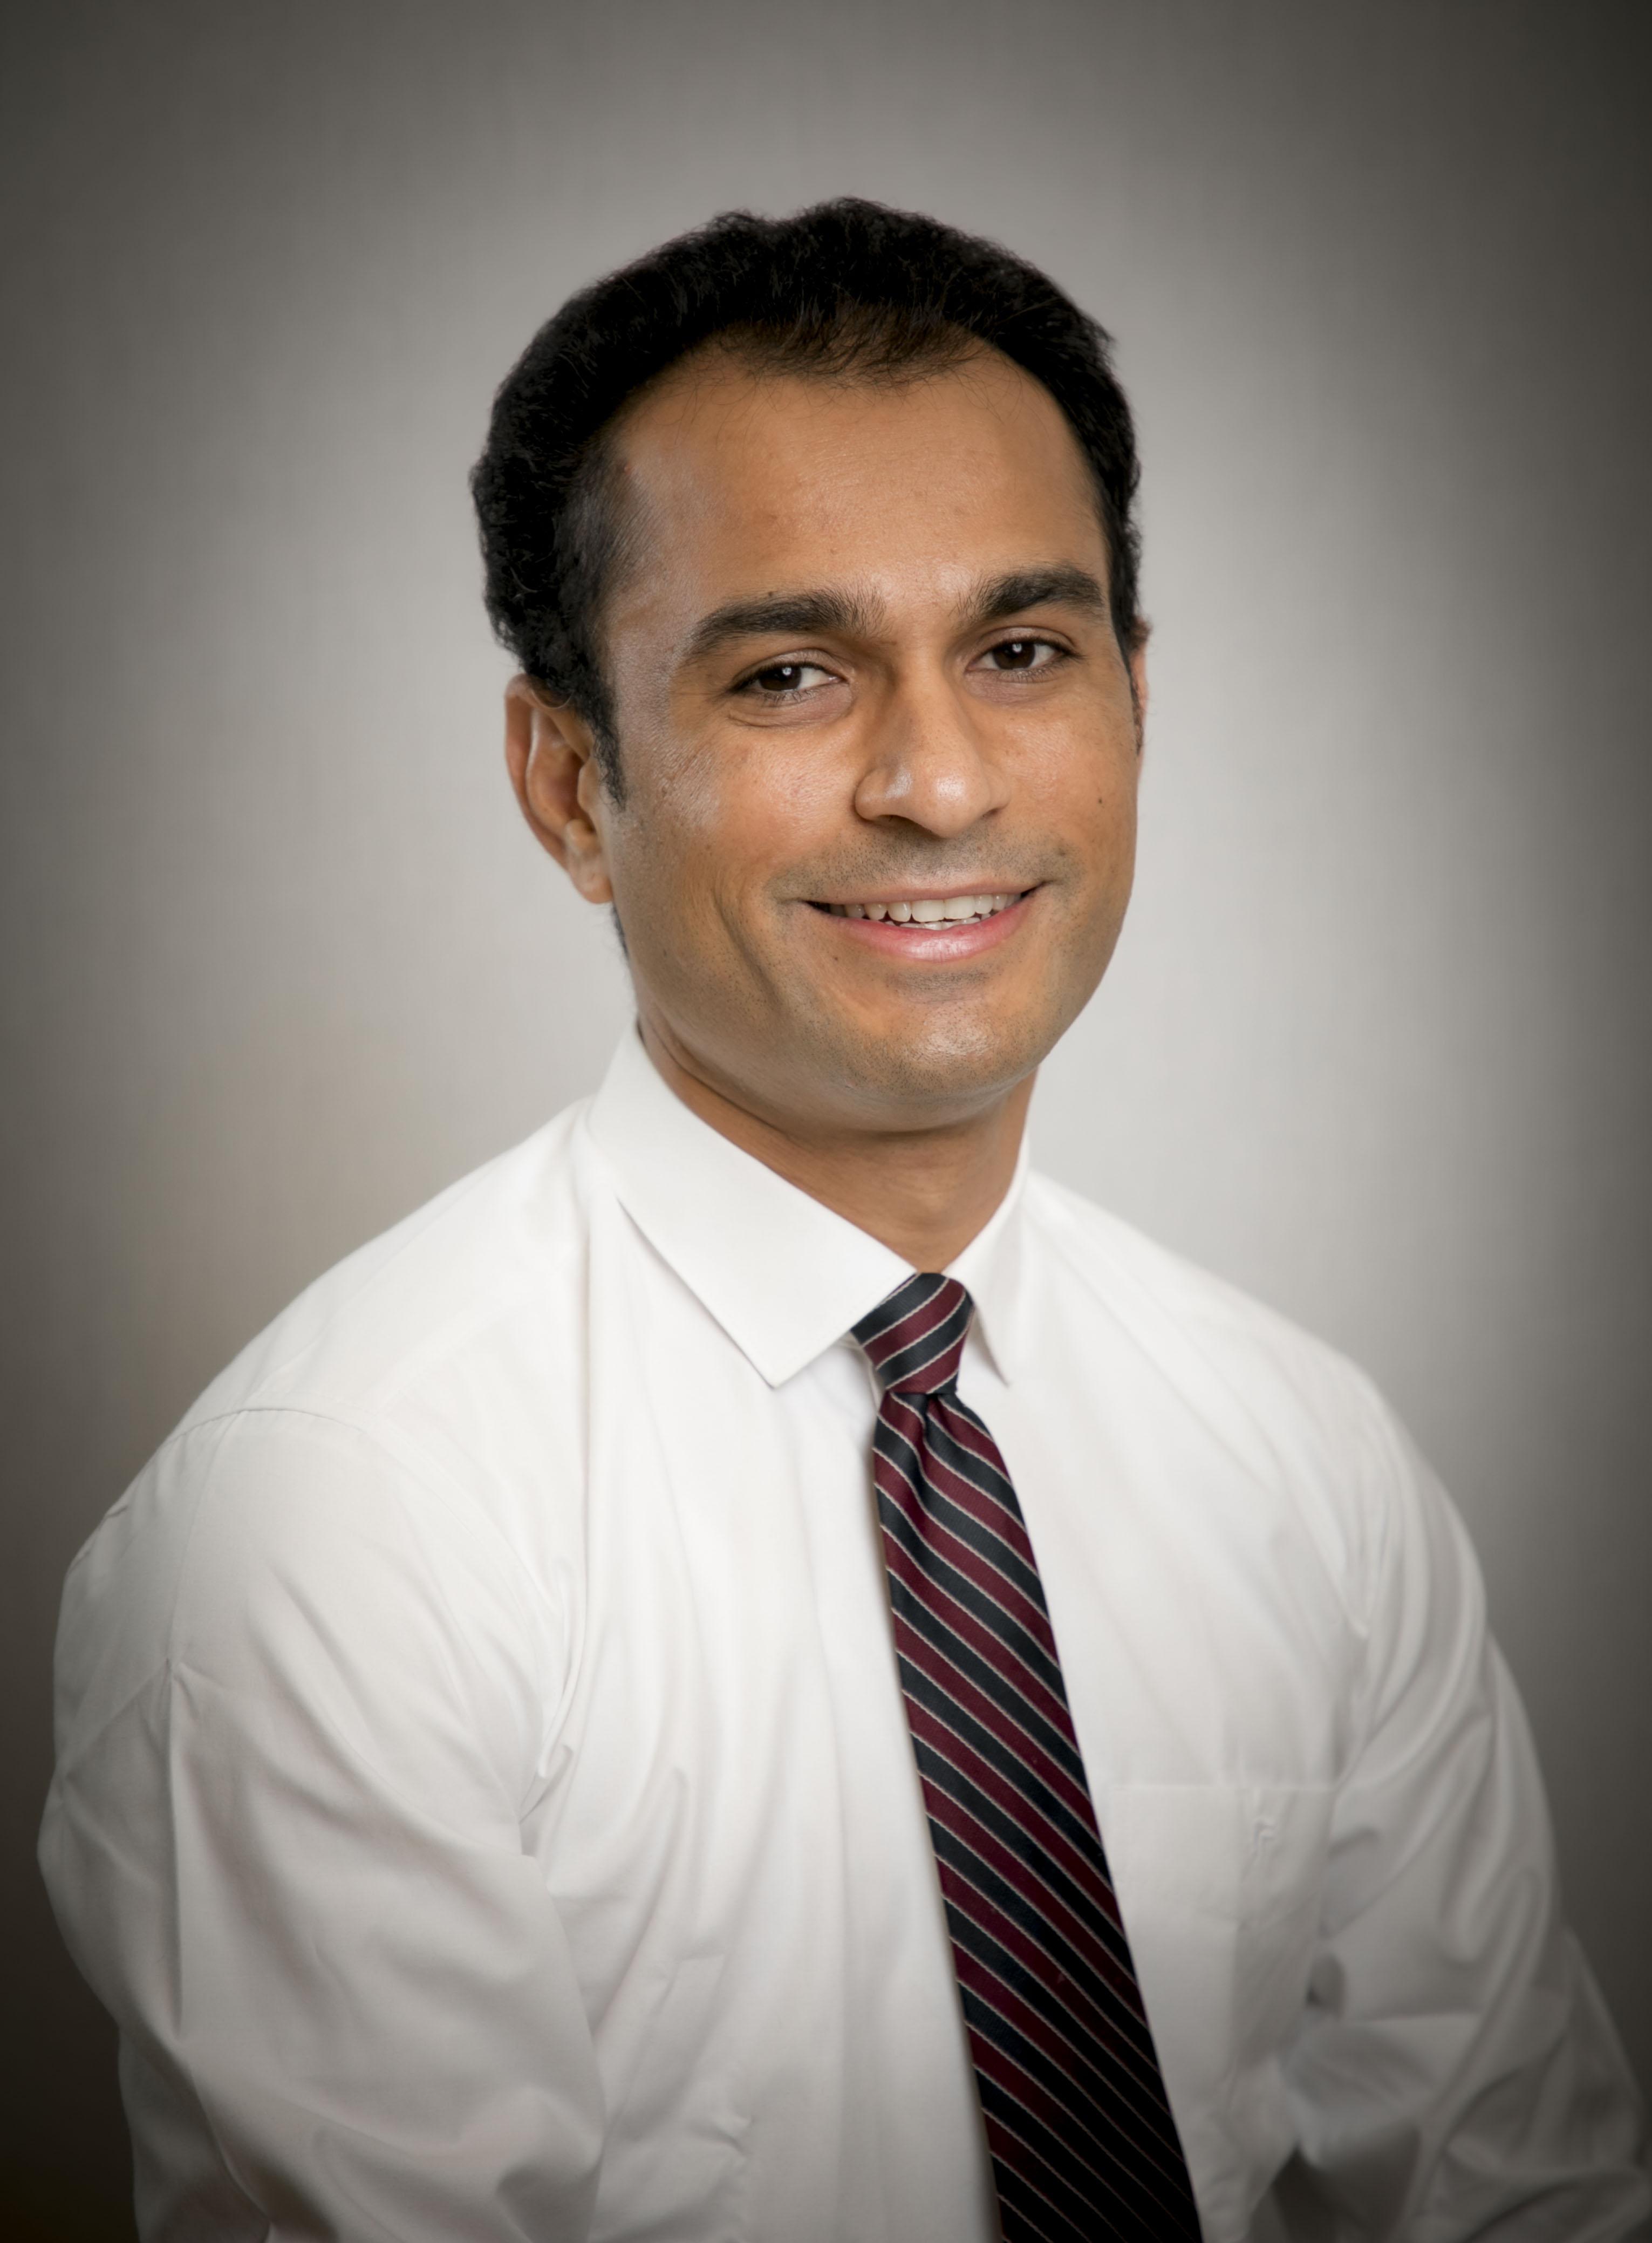 Dhaval Patel, M.S., MBA